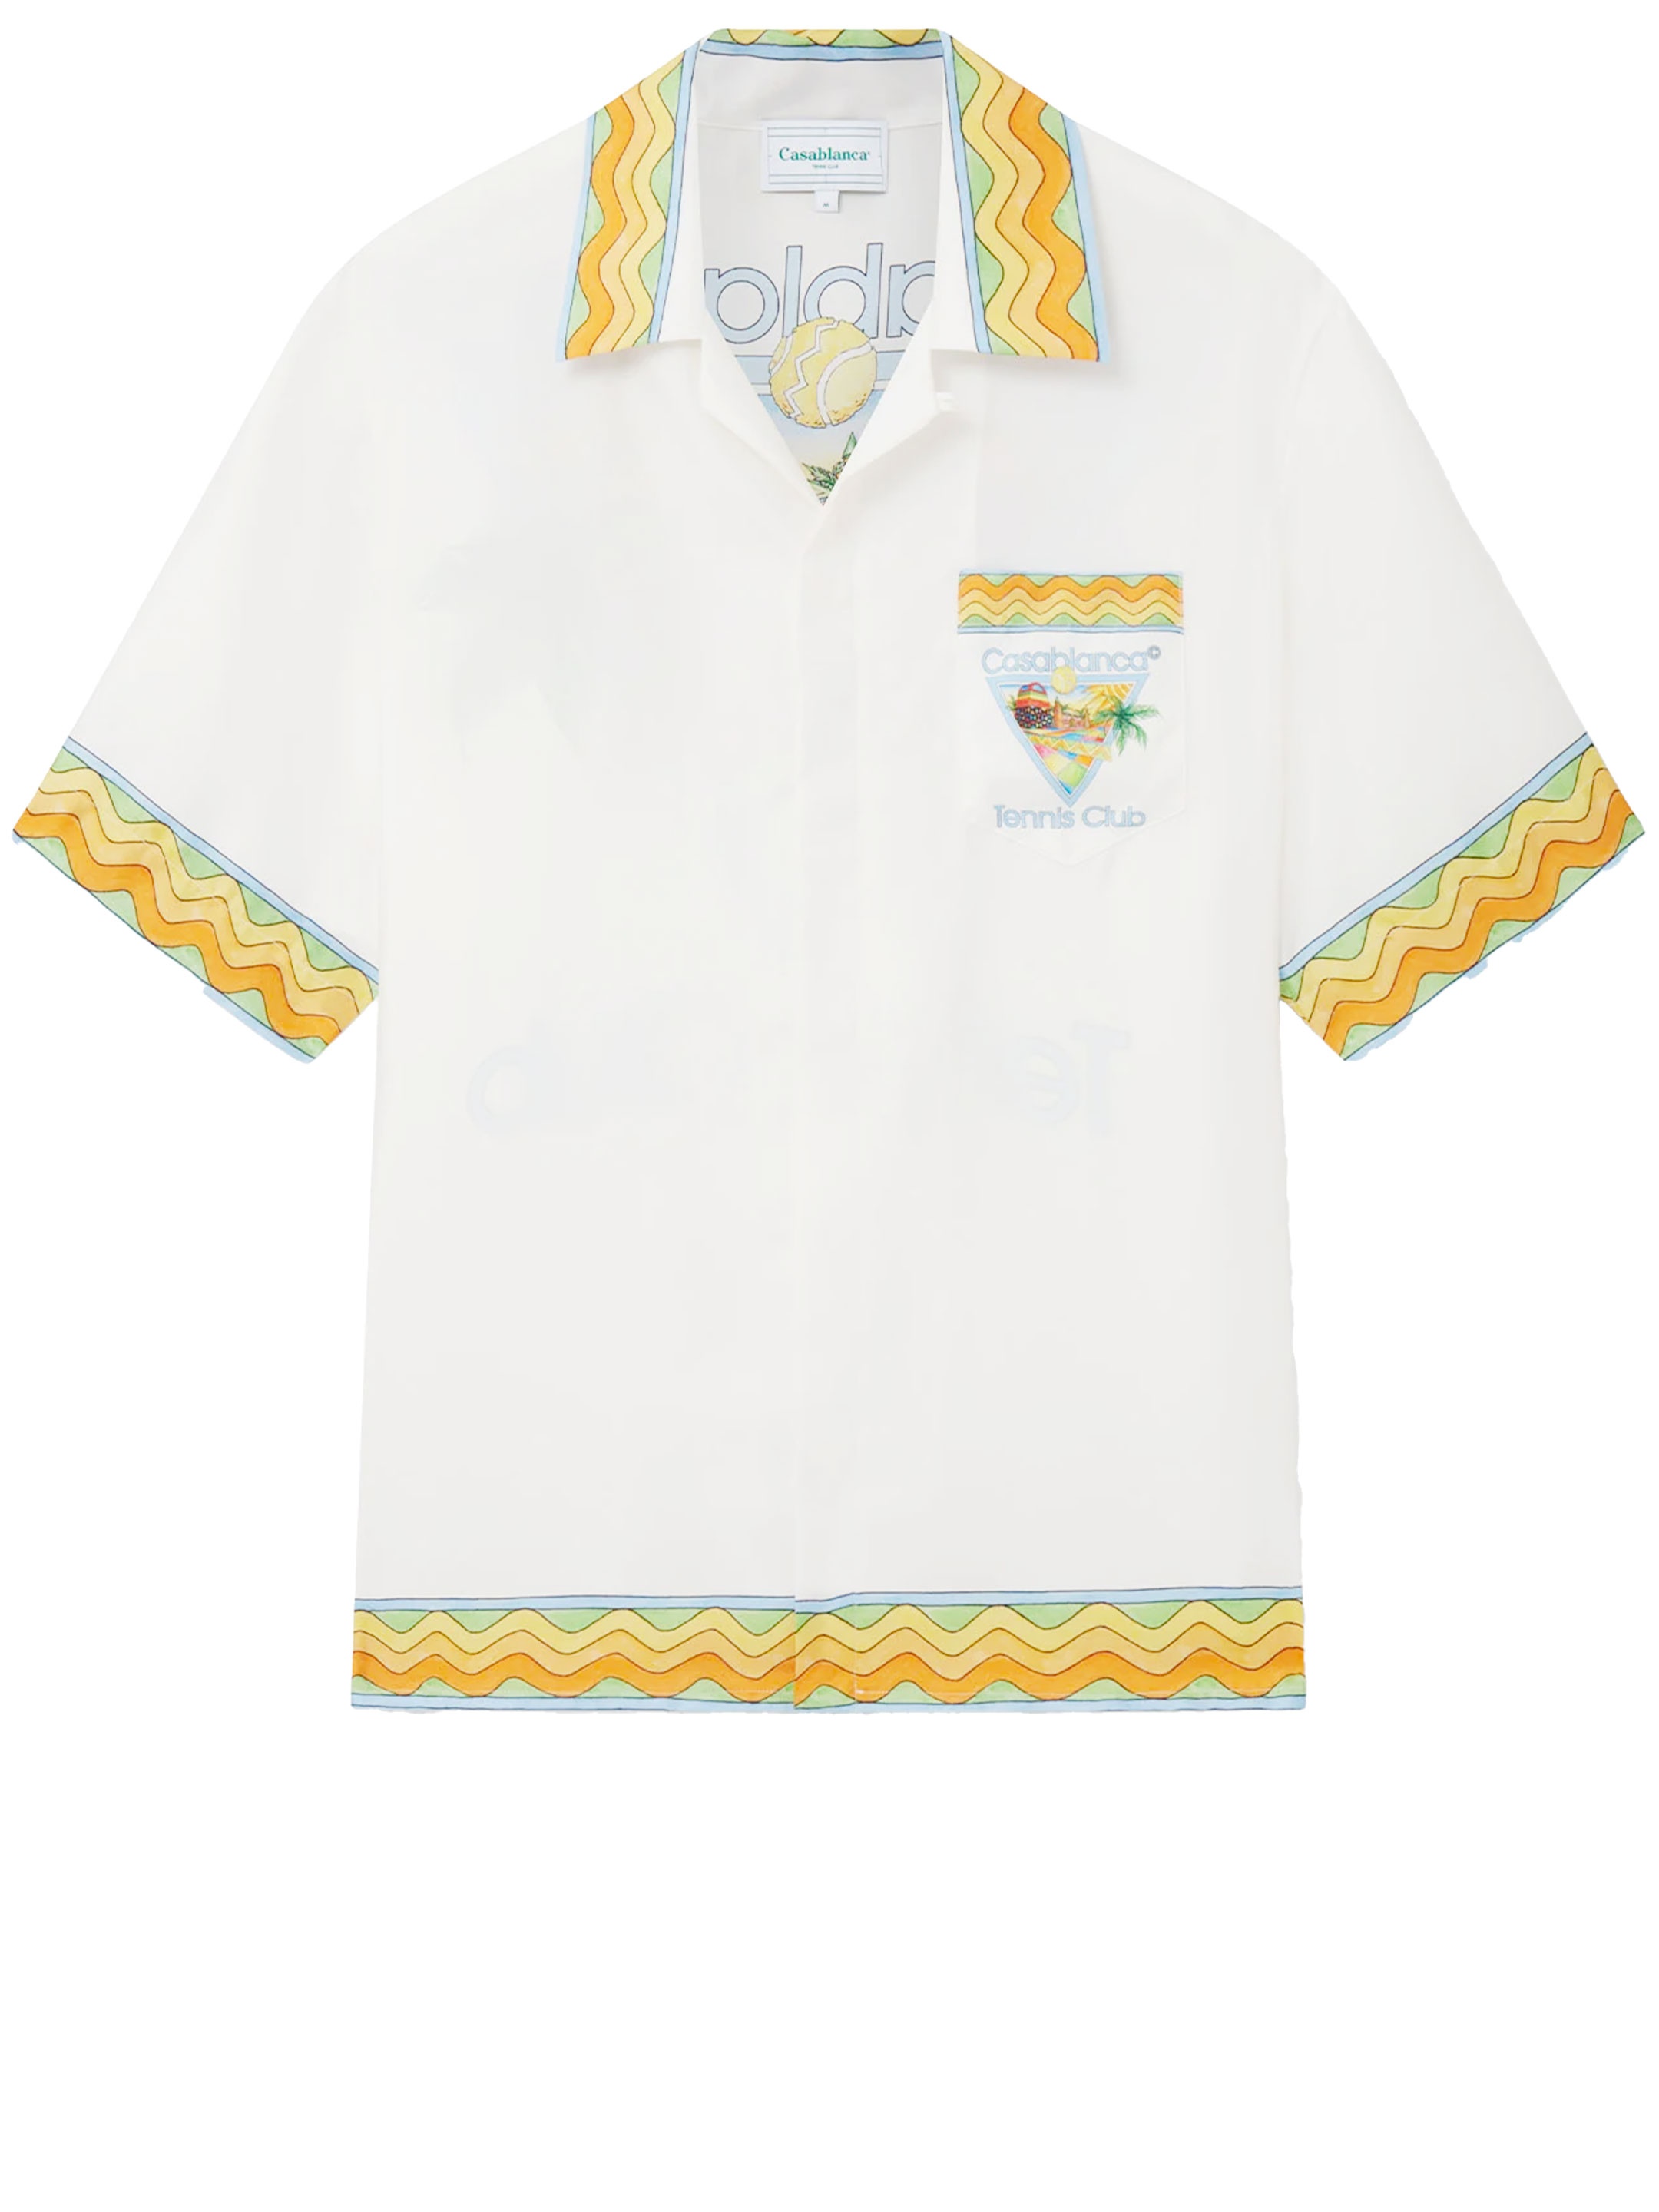 Afro Cubism Tennis Club shirt - 1